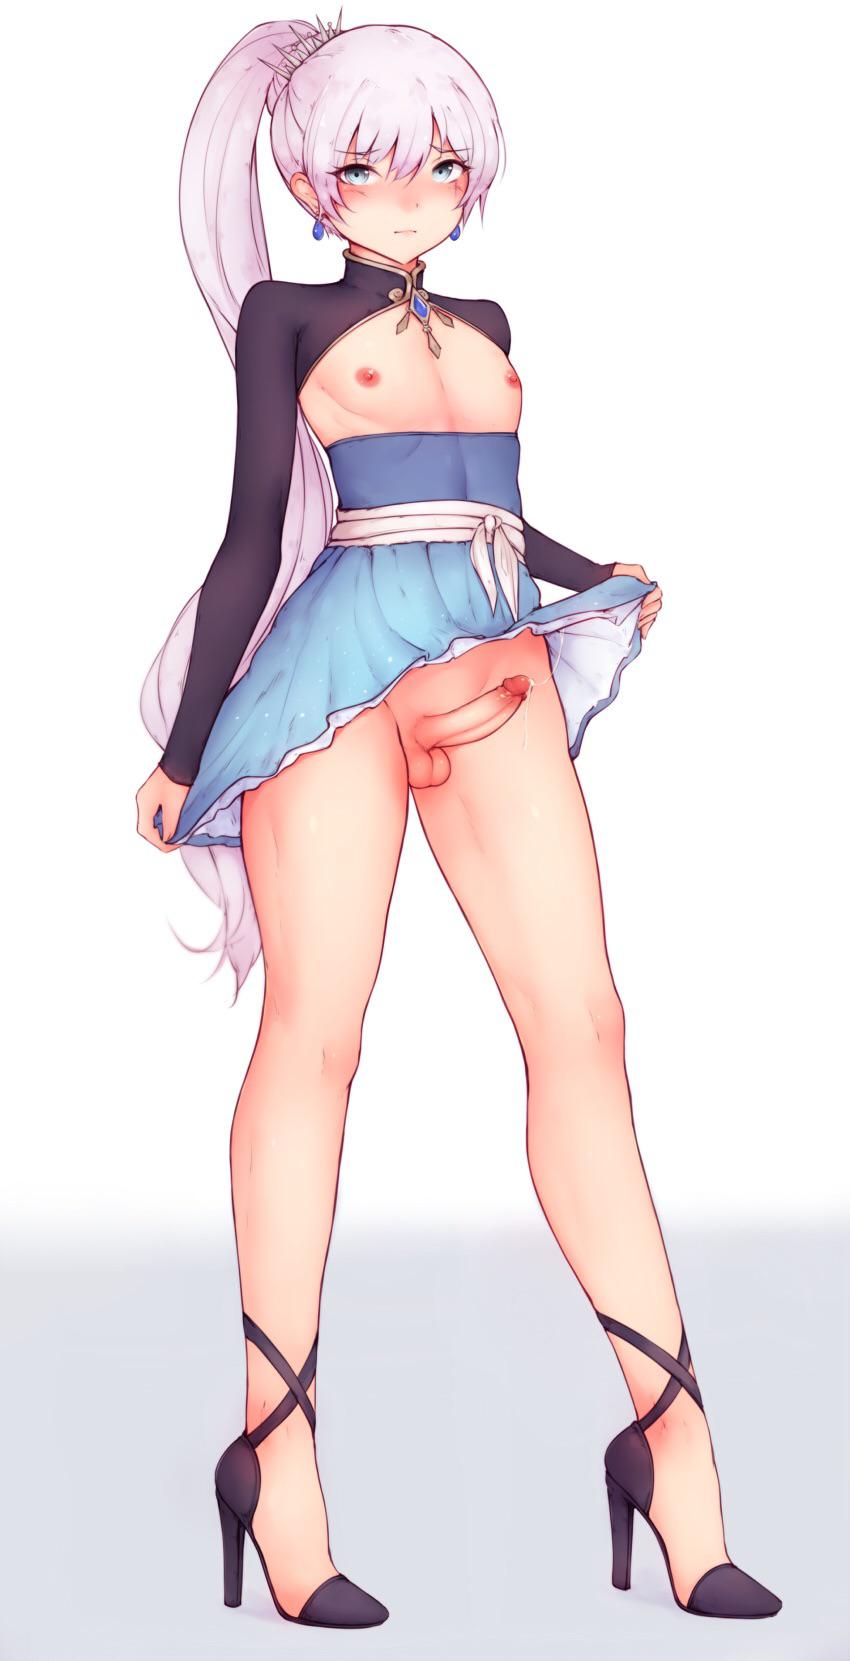 “#trap #skirt #hentai #hardon #penis #cum #crossdress #crossplay #heels #wi...